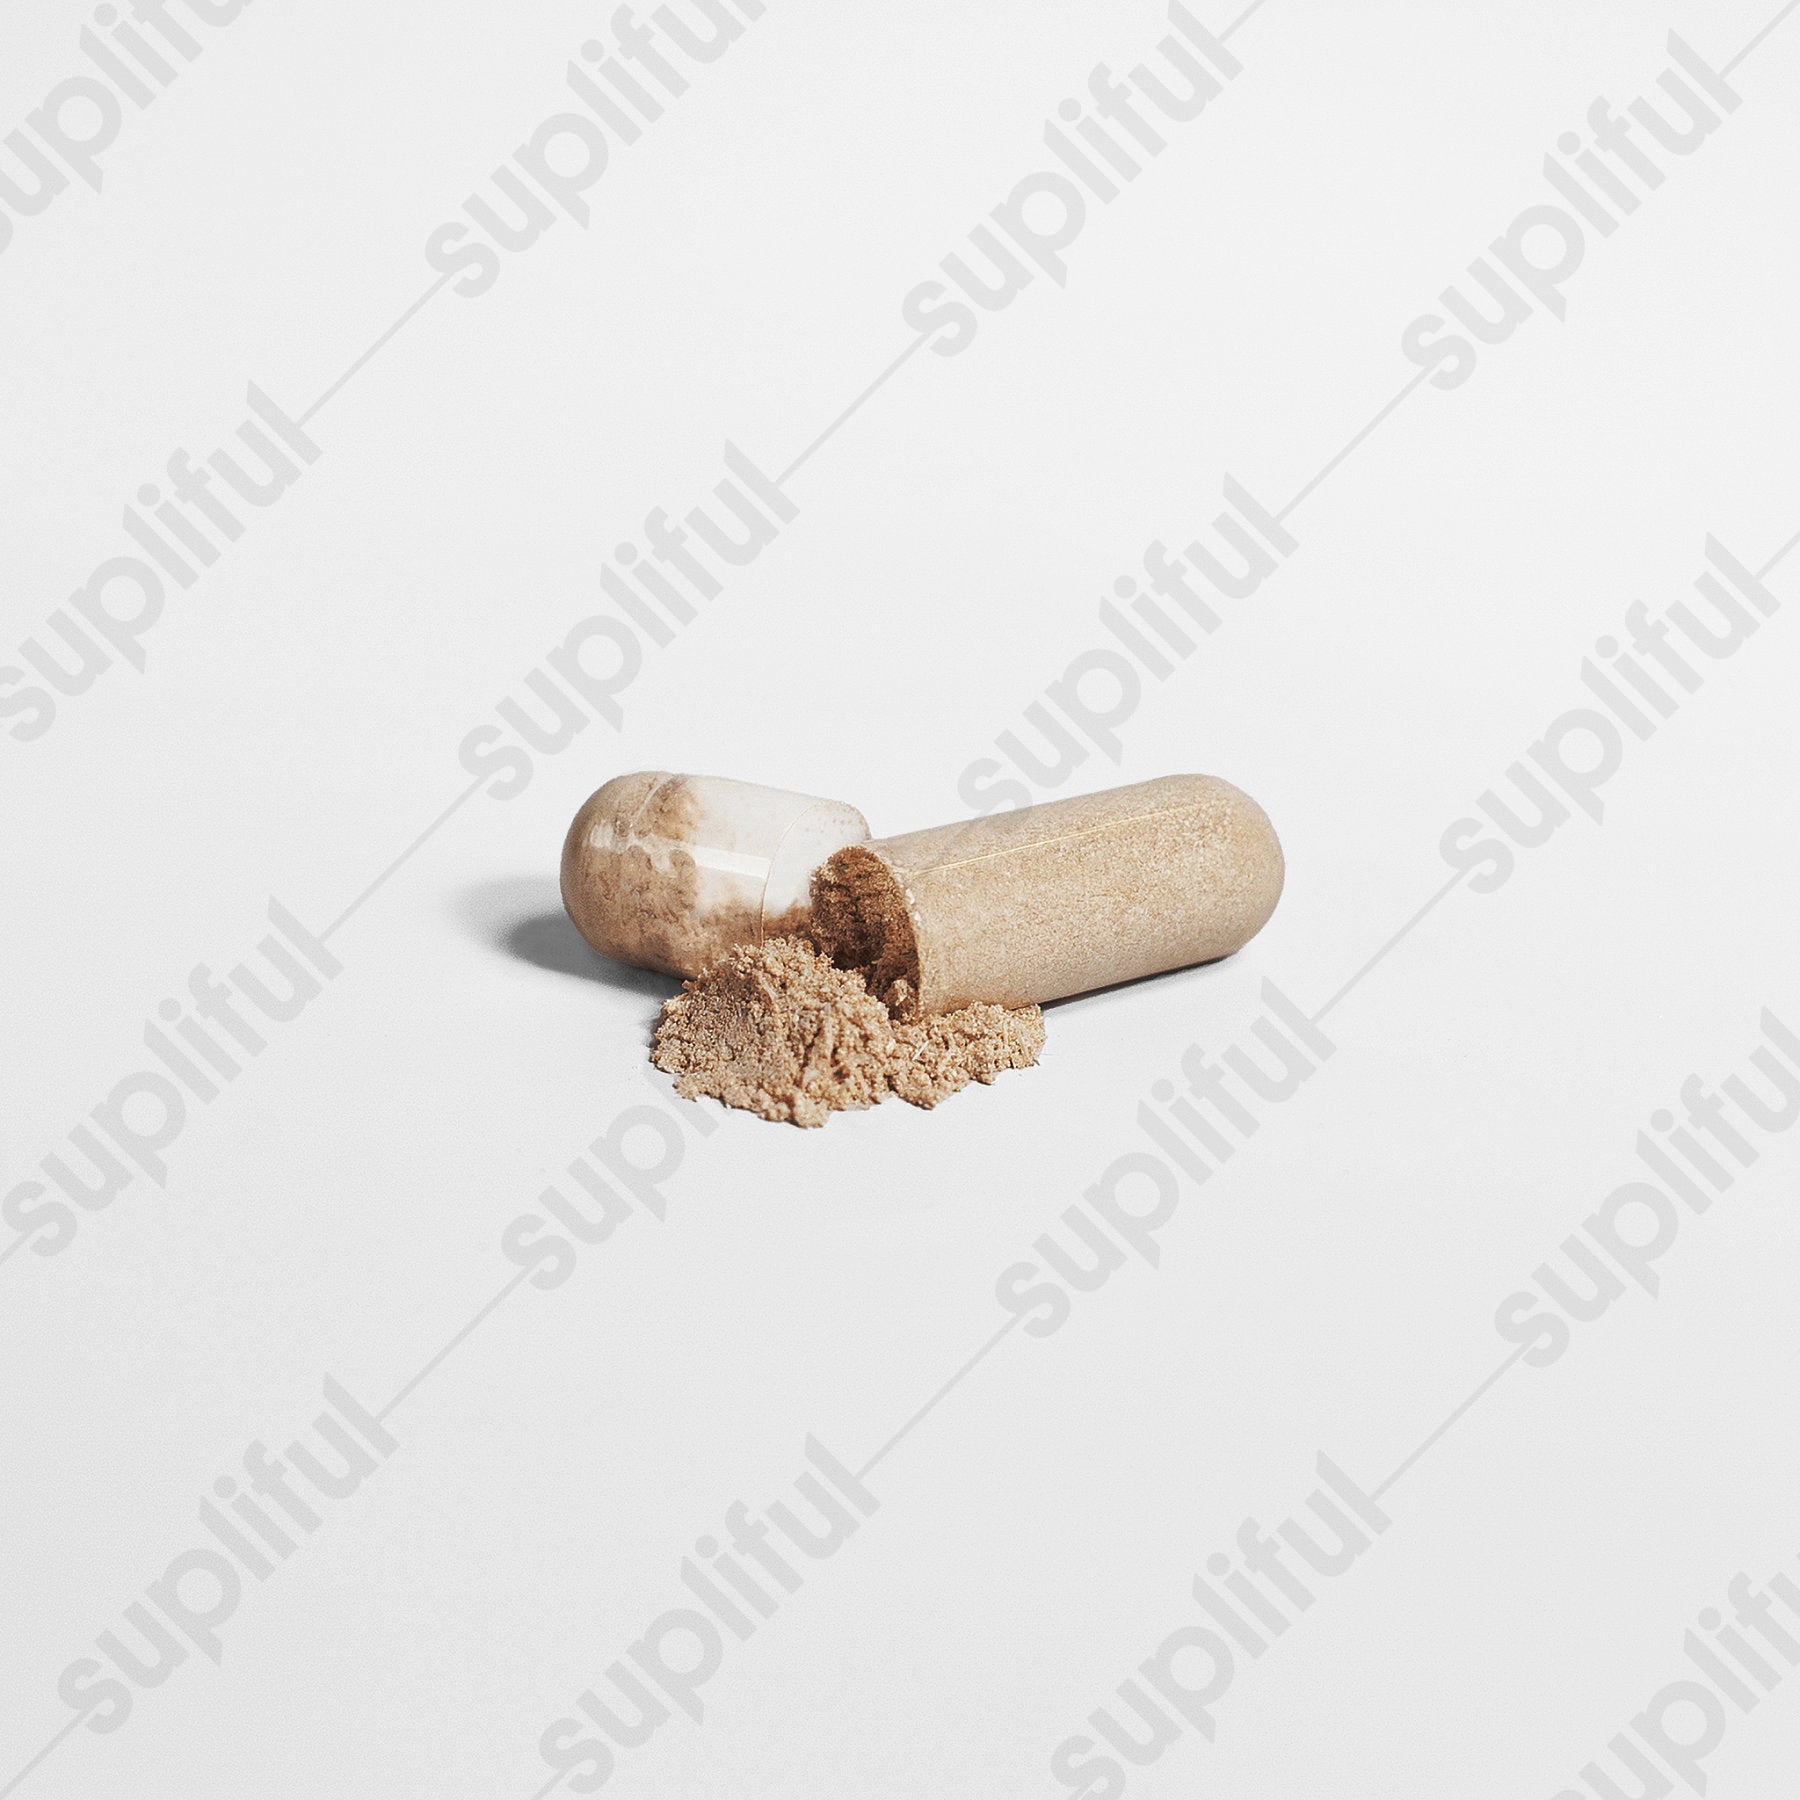 Dawg Pound Mushroom 10 X Supplement Capsules- Broken Capsule Showing Inner Content 